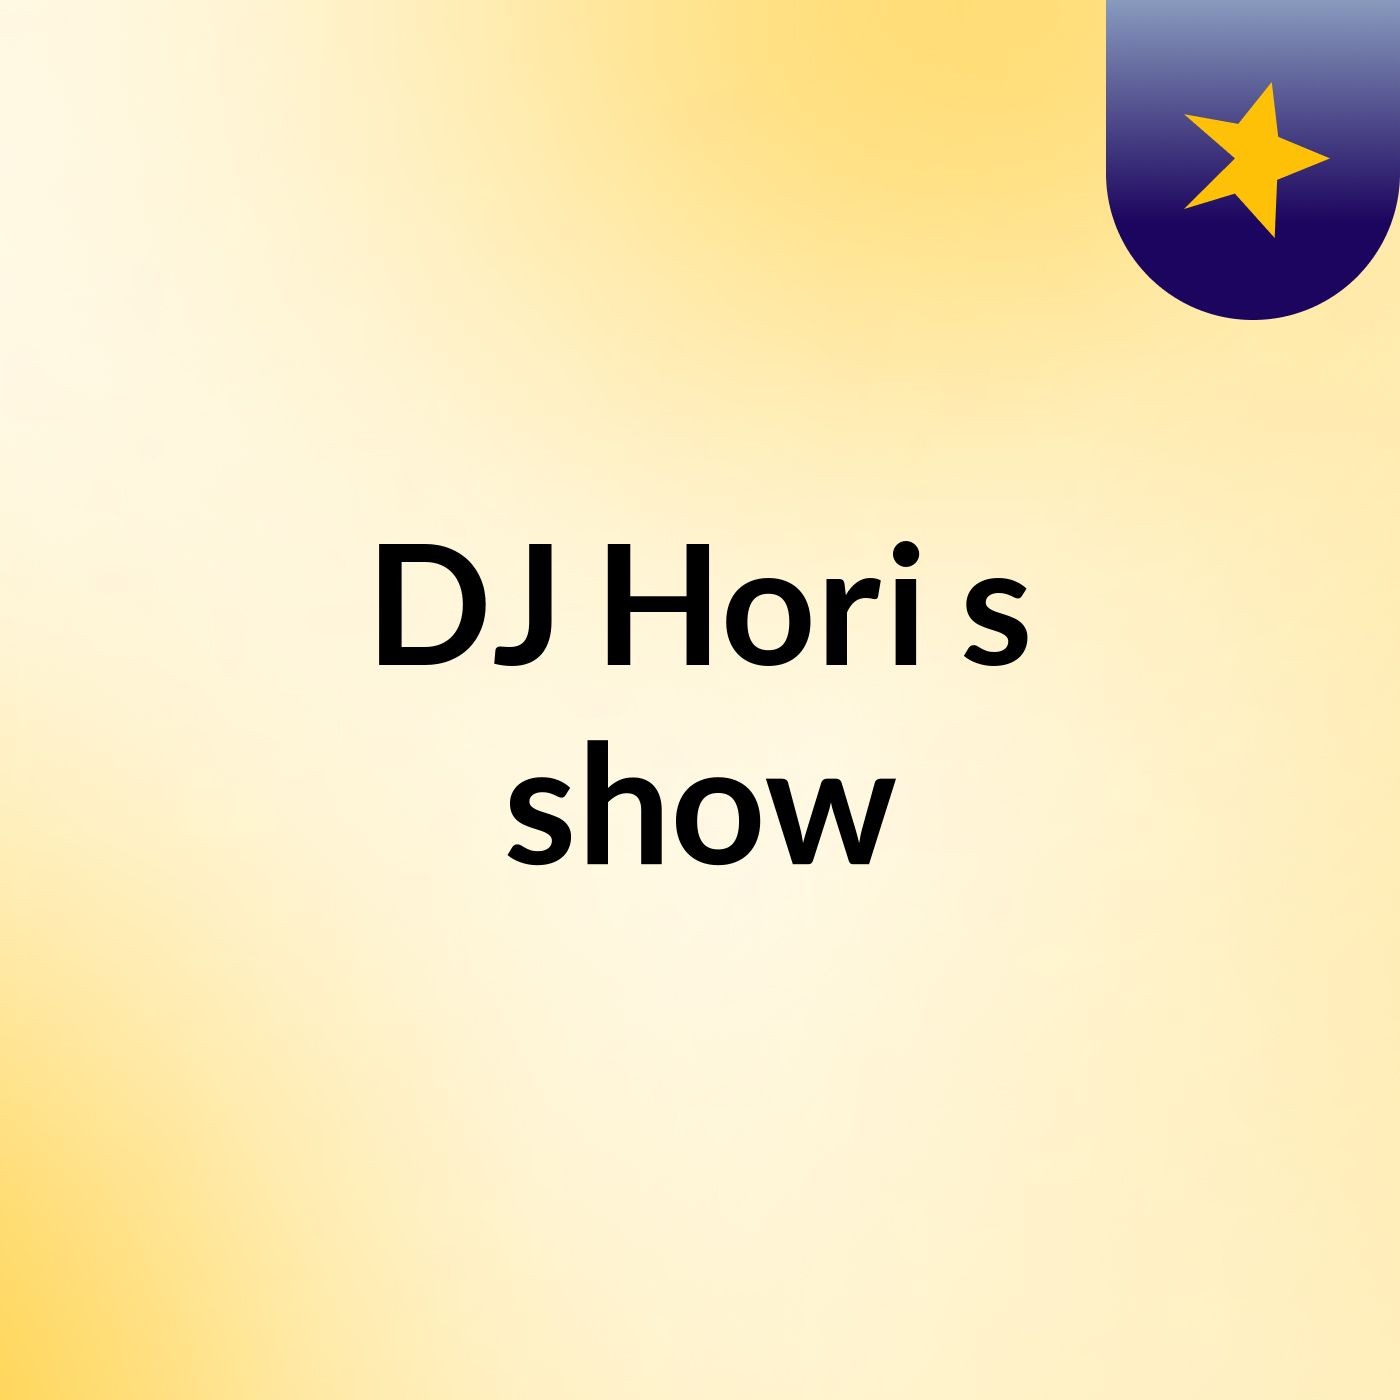 DJ Hori's show